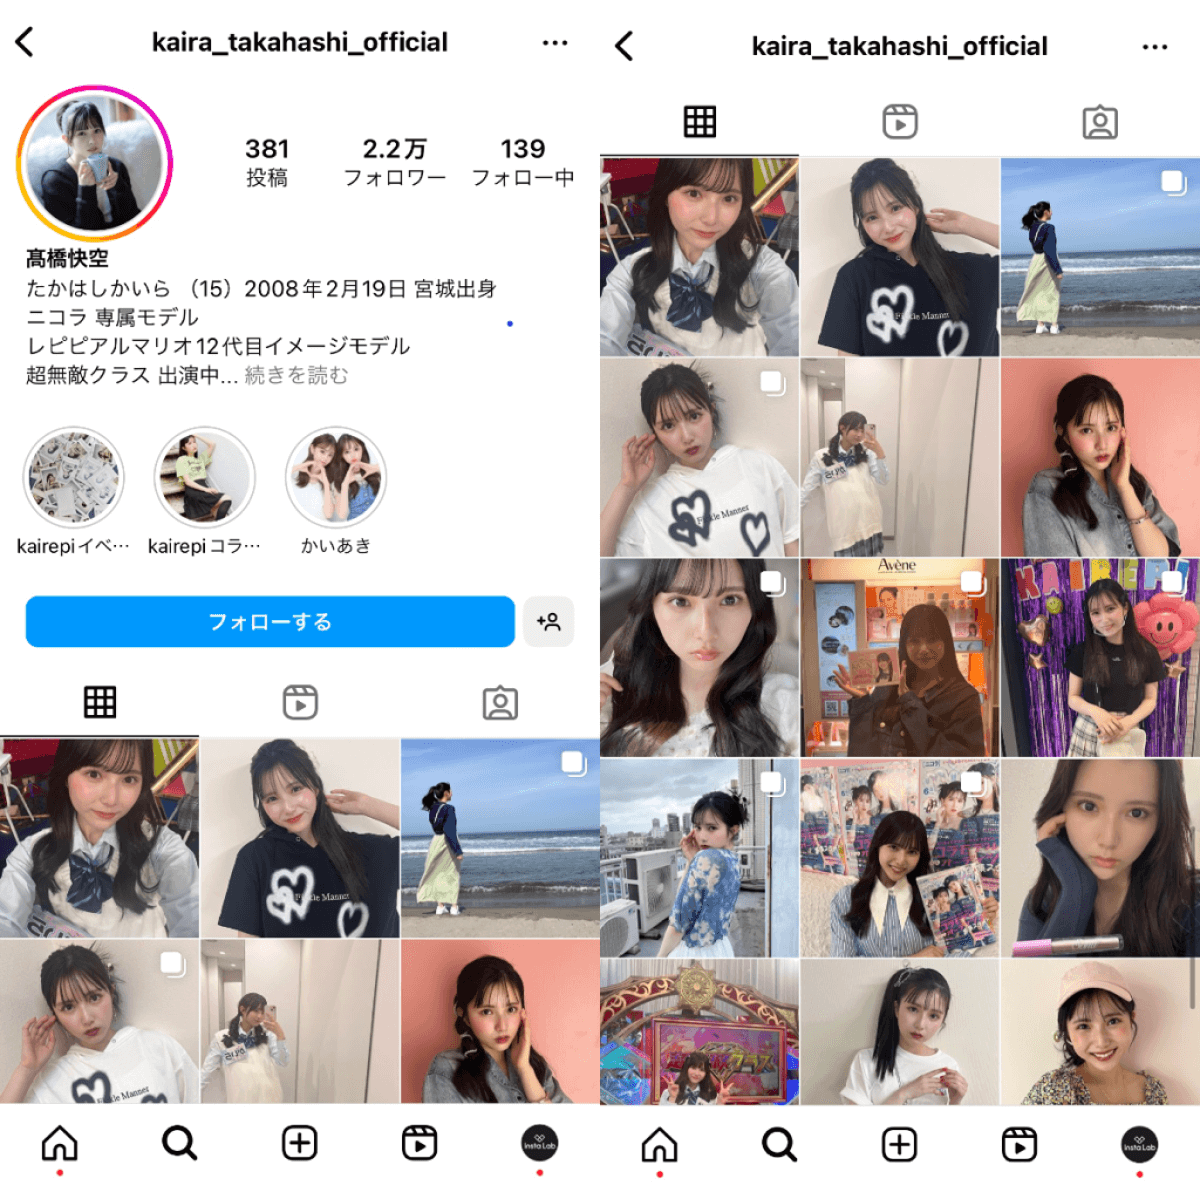 instagram-account-kaira-takahashi-official